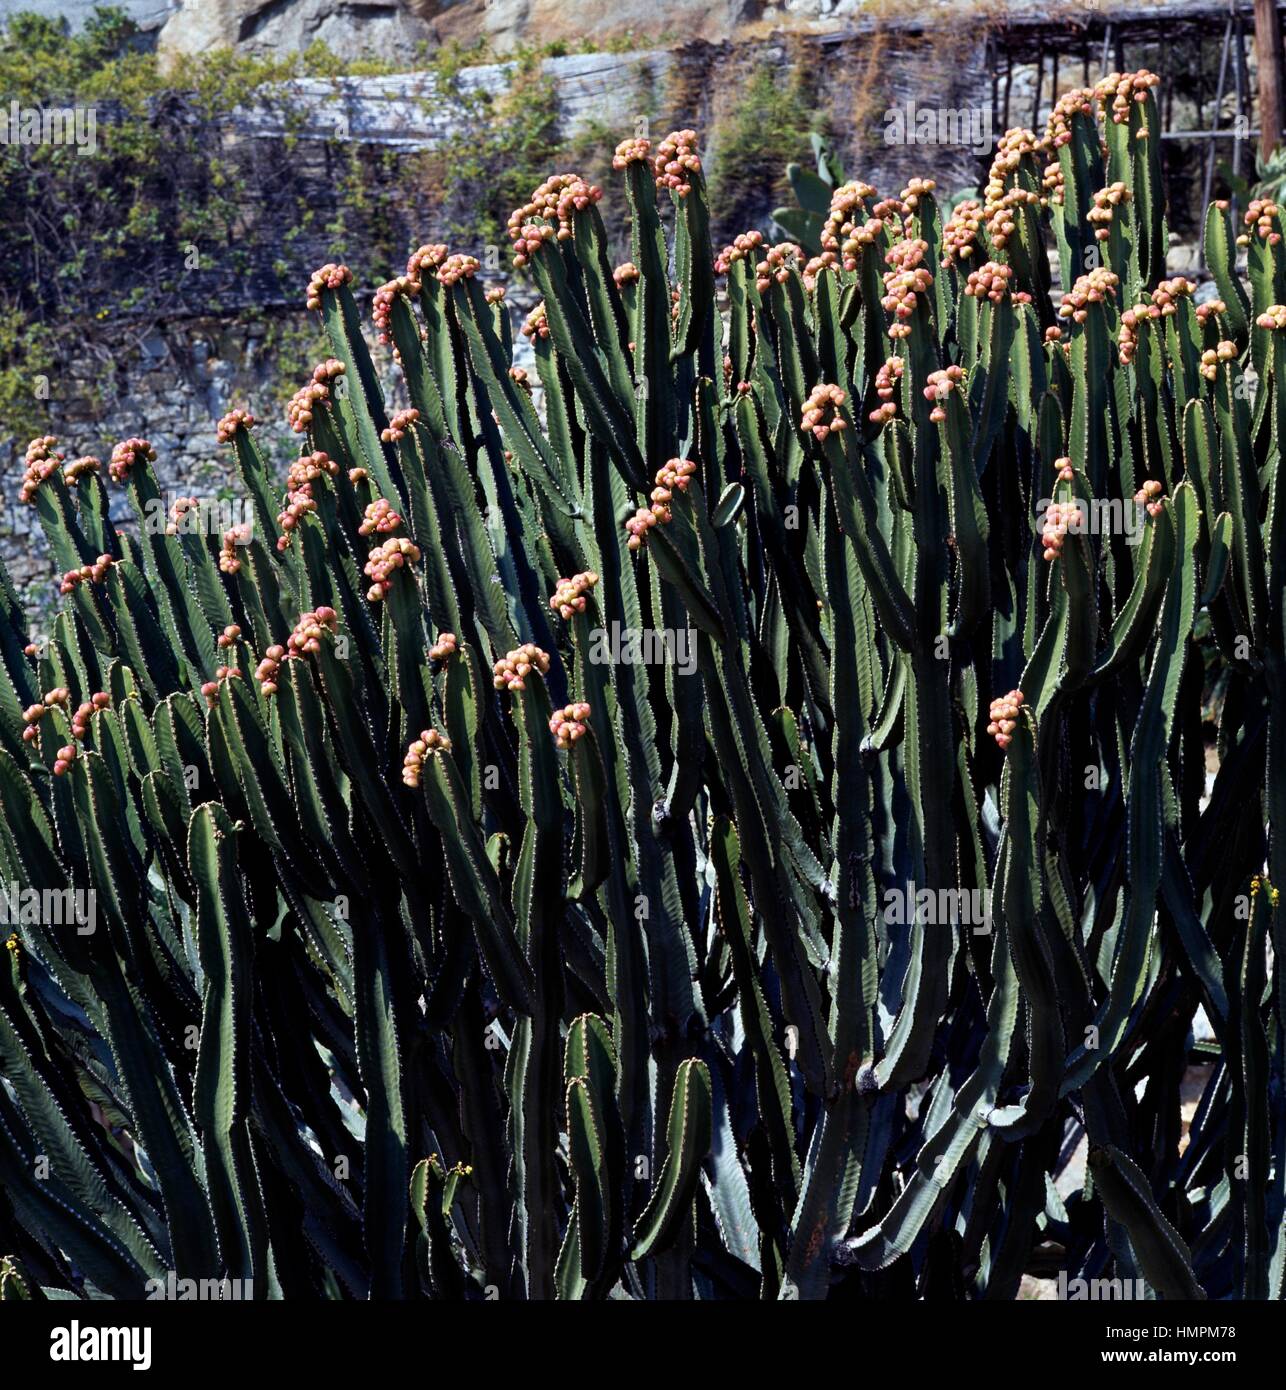 Desert candle or Candelabra spurge (Euphorbia abyssinica), Euphorbiaceae. Stock Photo